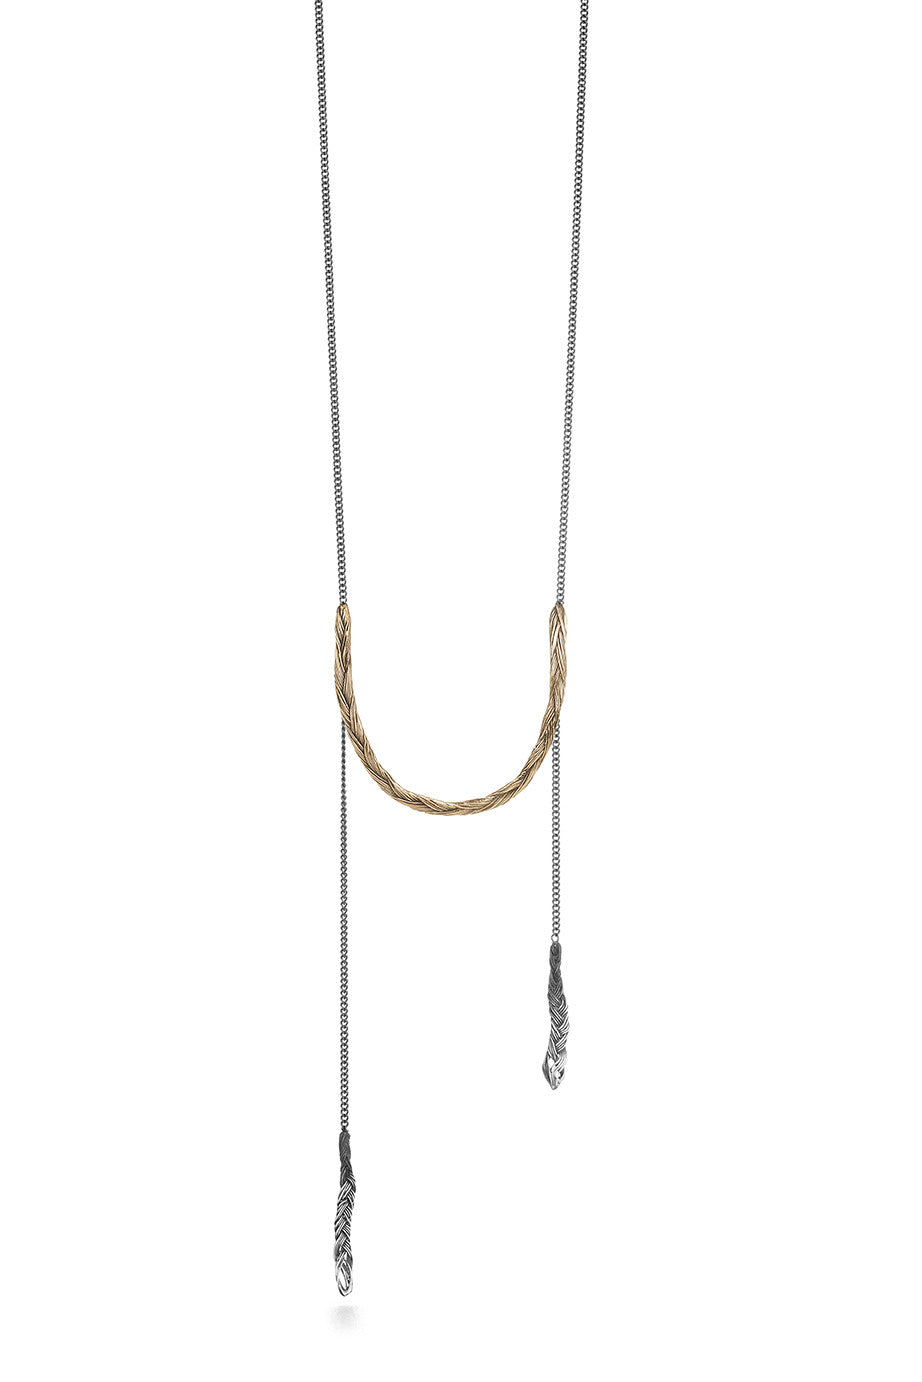 Braid Necklace - U-shaped bronze braid on long chain